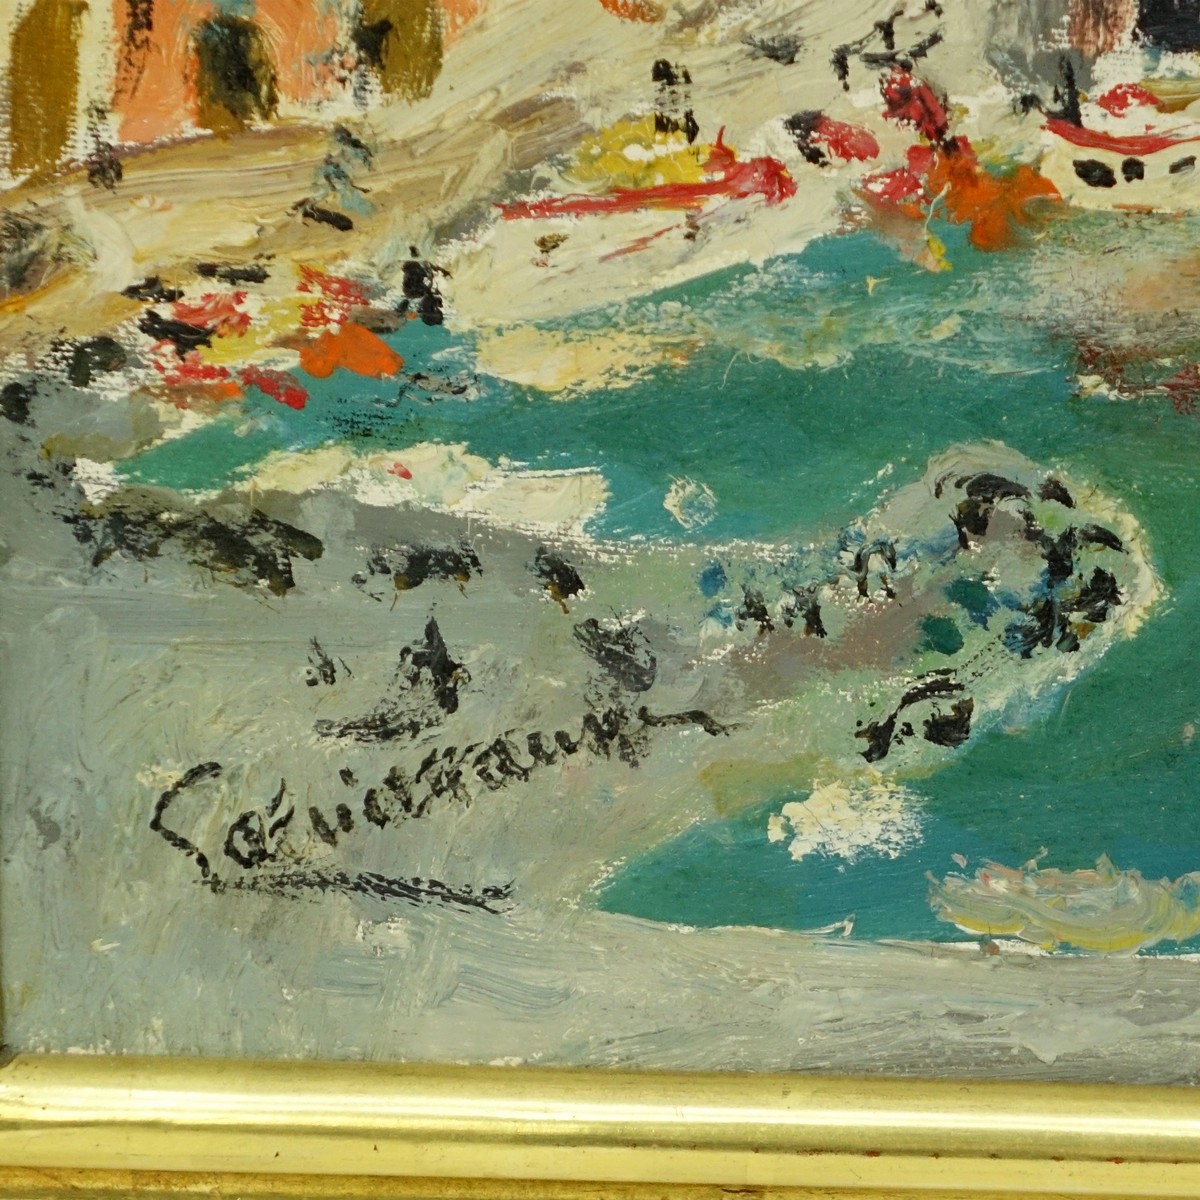 20th Century Continental School Oil On Canvas "Portofino". Signed indistinctly lower left.